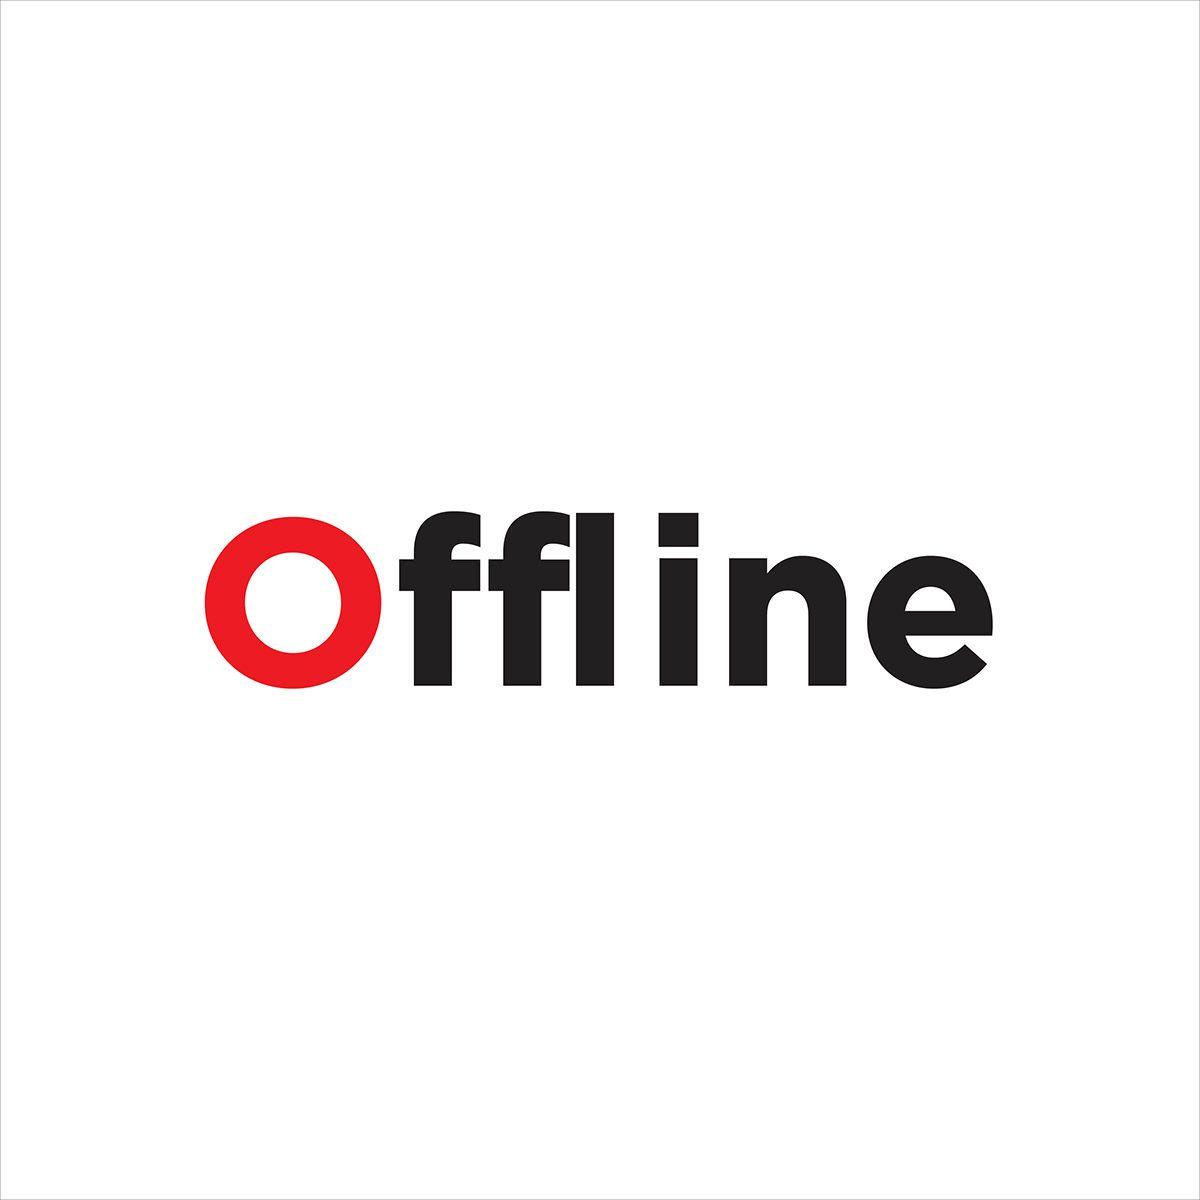 Offline Logo - offline - verbicon by Ravi Koranga | mefvrt | Logos design ...